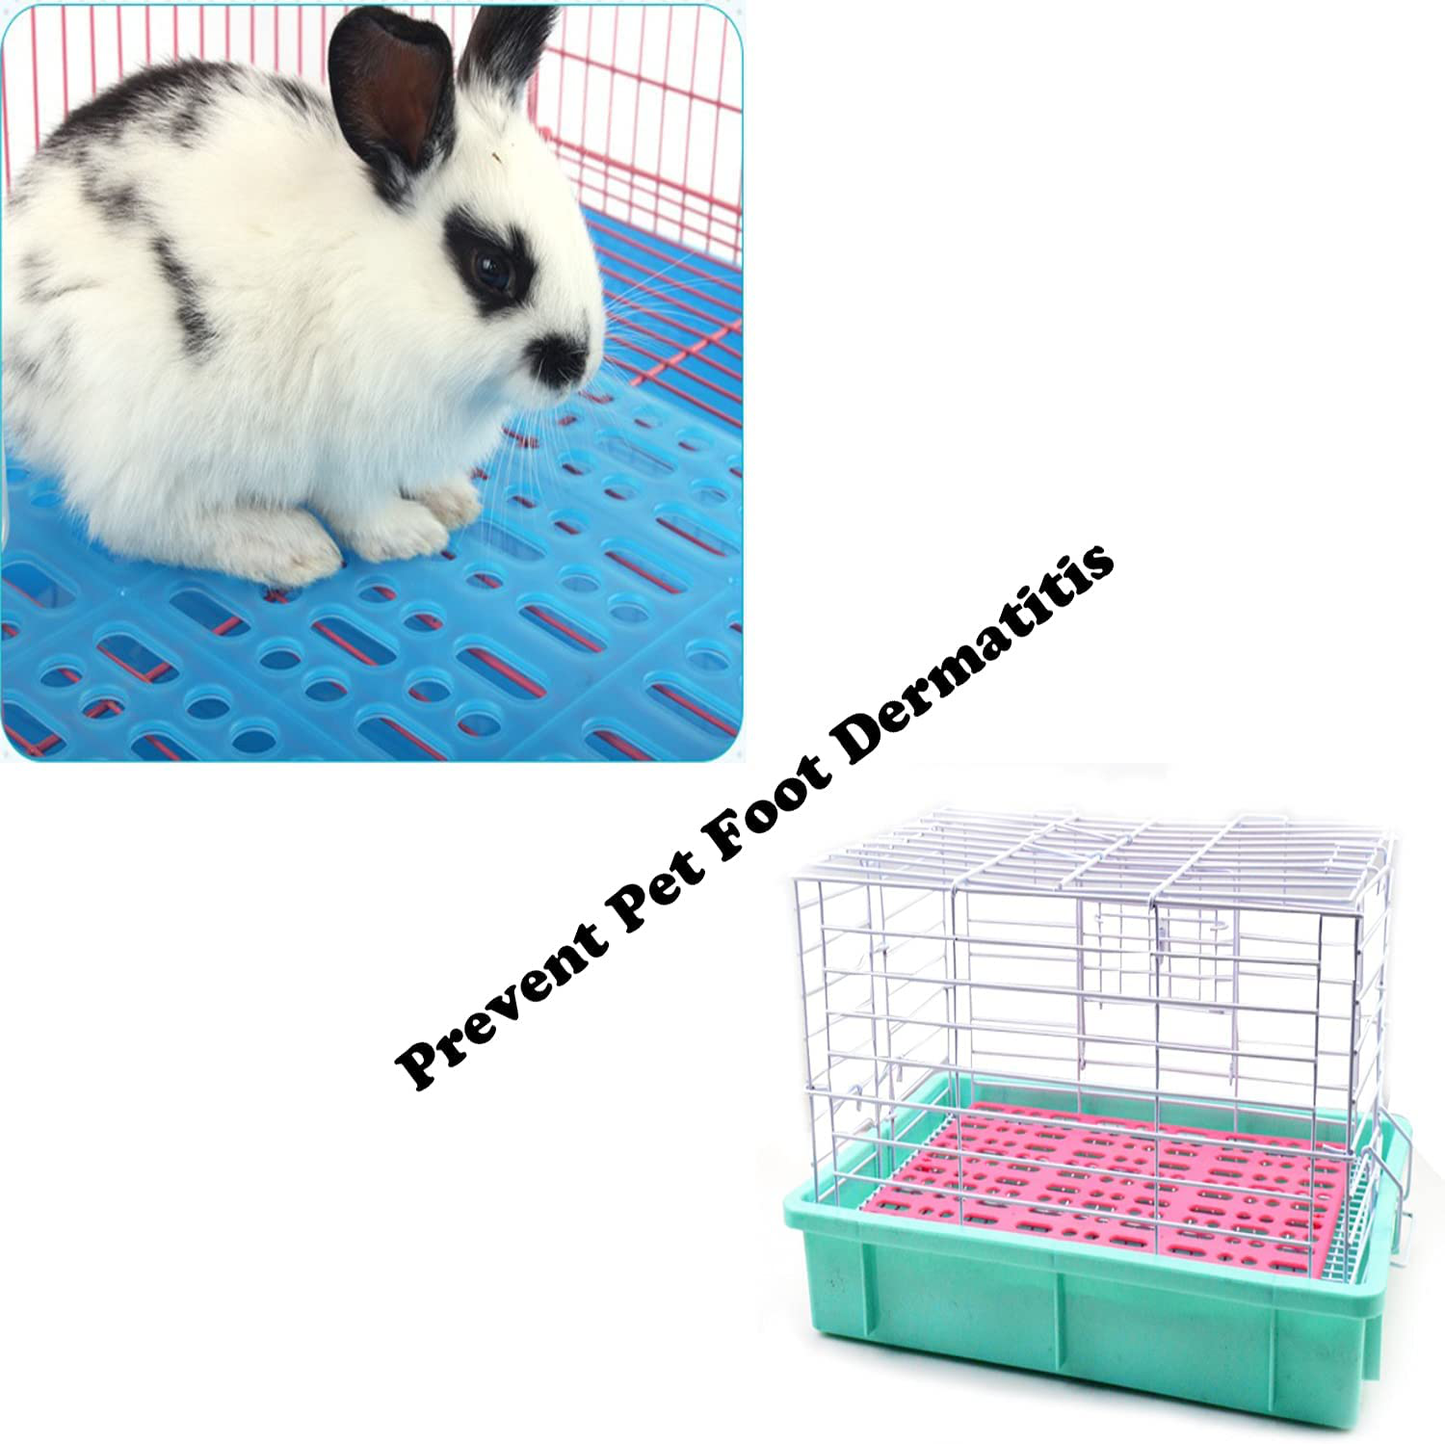 WANBAO Plastic Bunny Foot Pad, Rabbit Cage Mat B